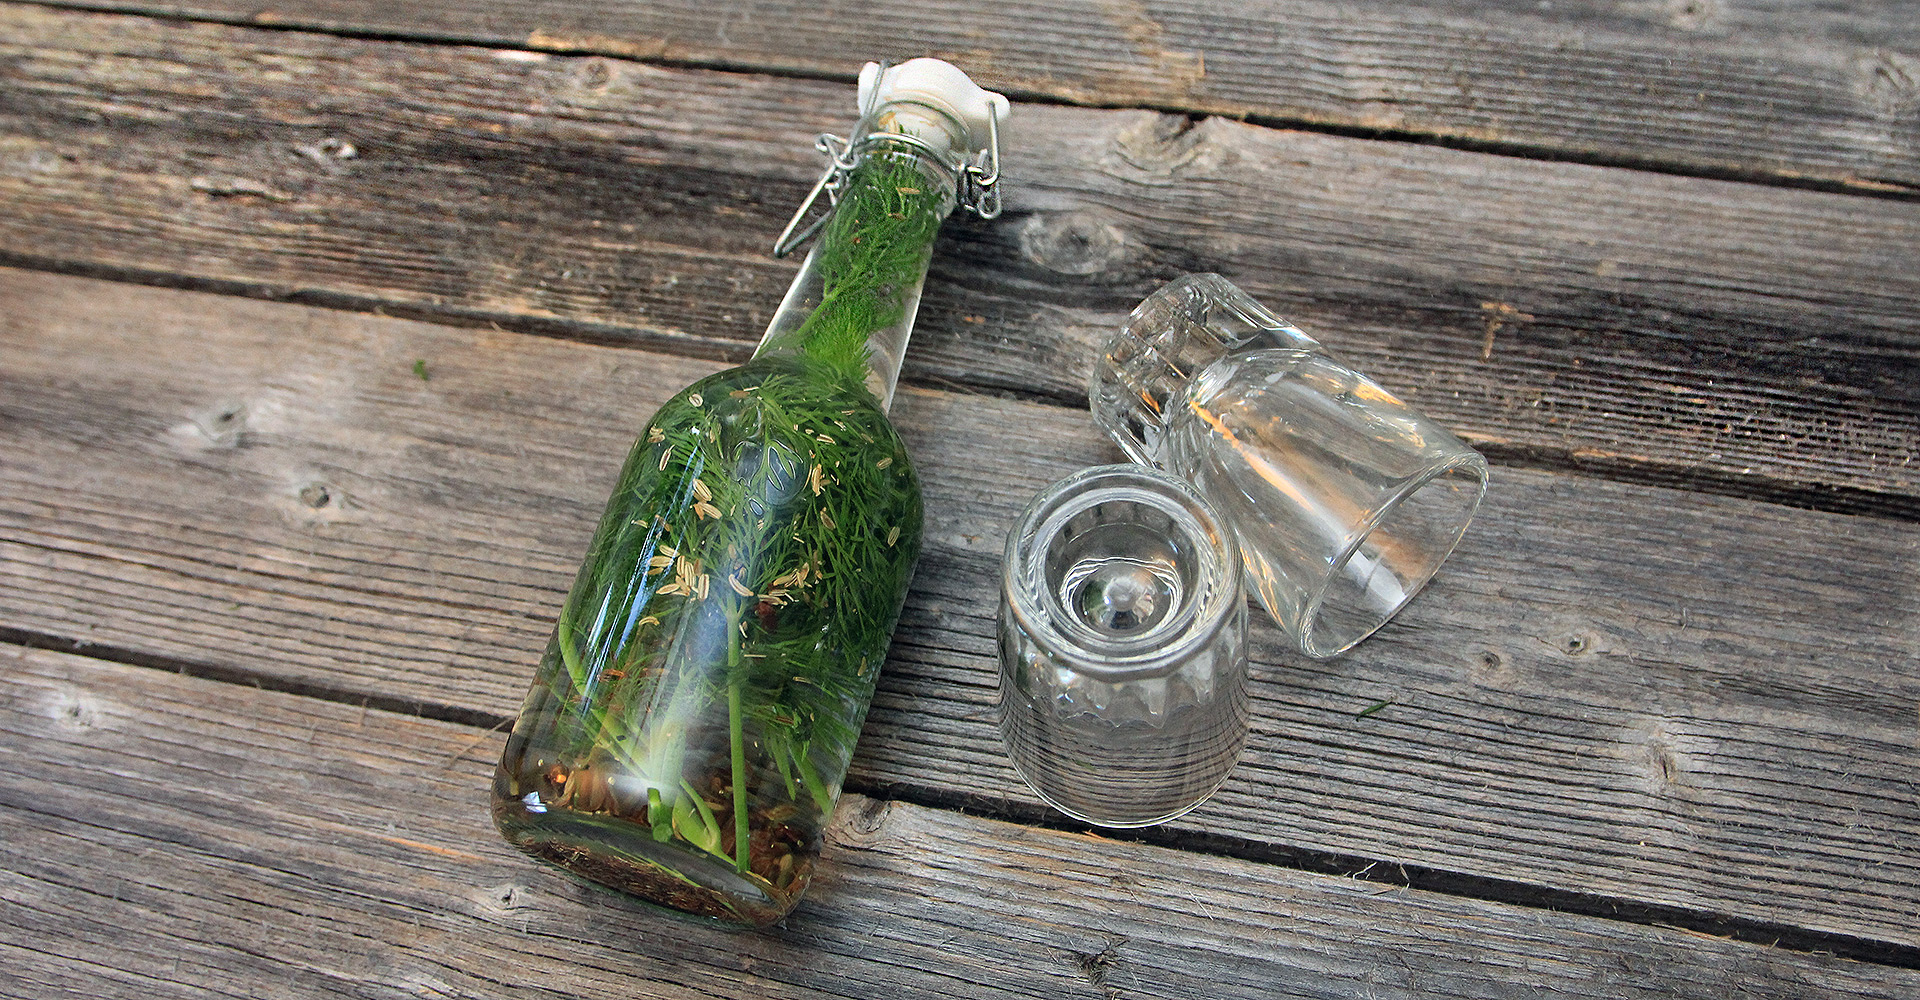 A bottle of aquavit and two shot glasses